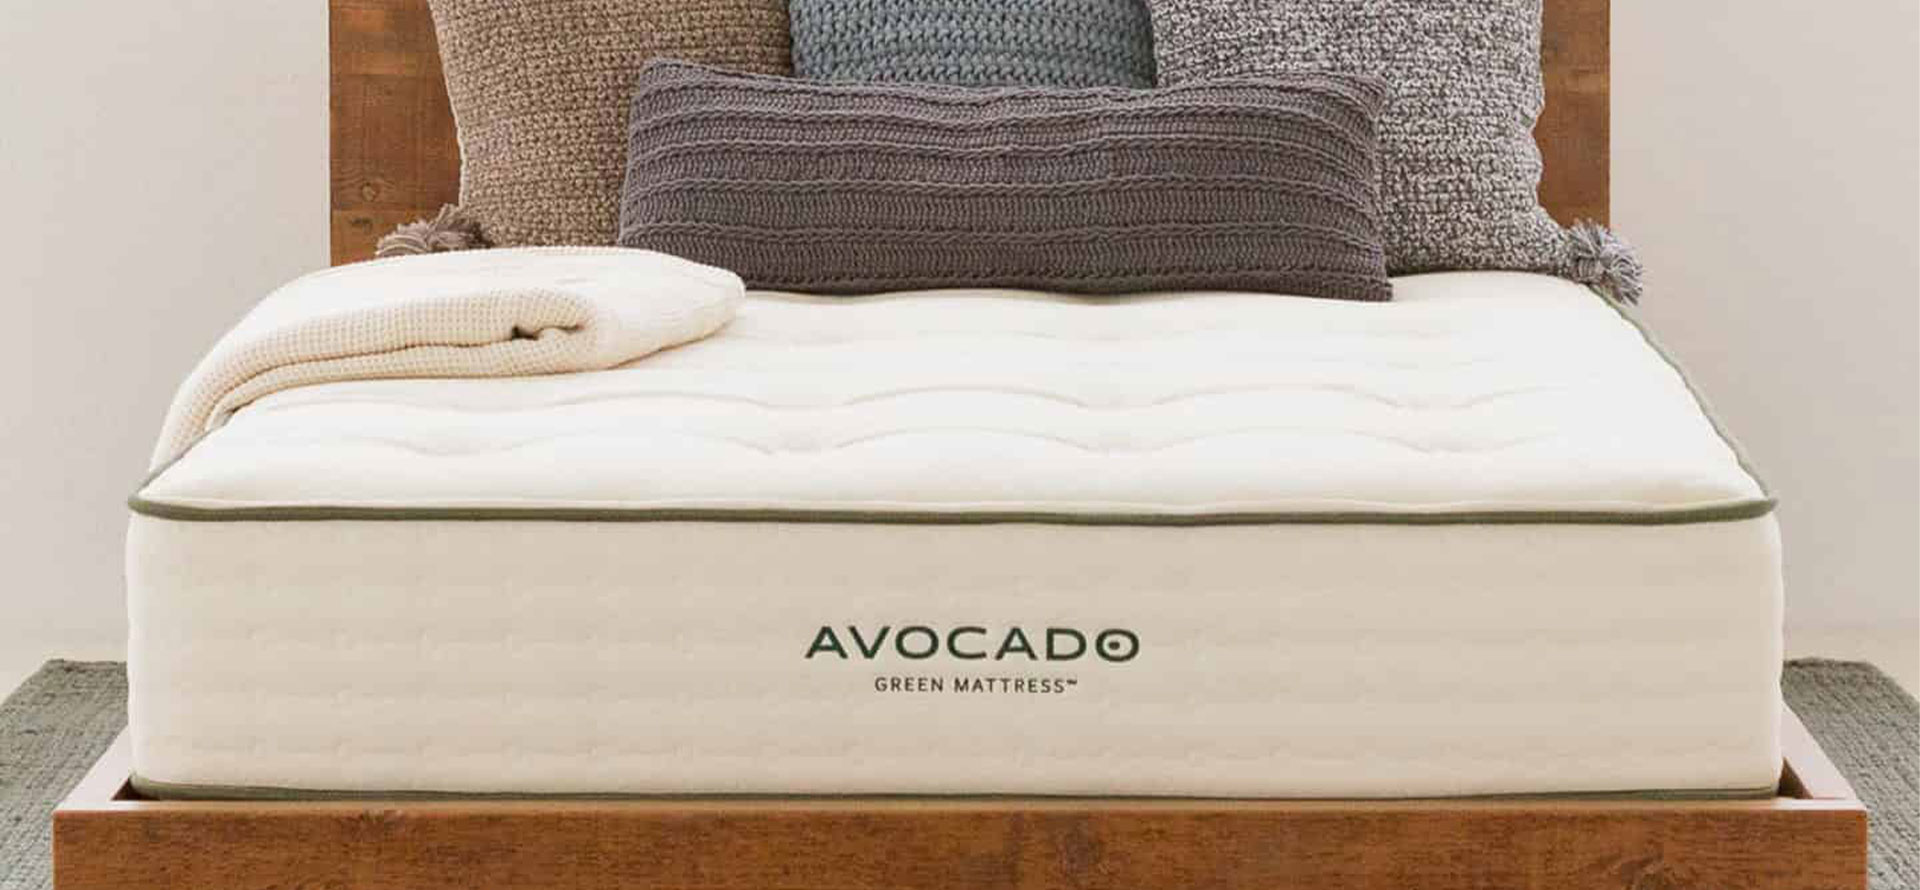 Avocado mattress on bed.